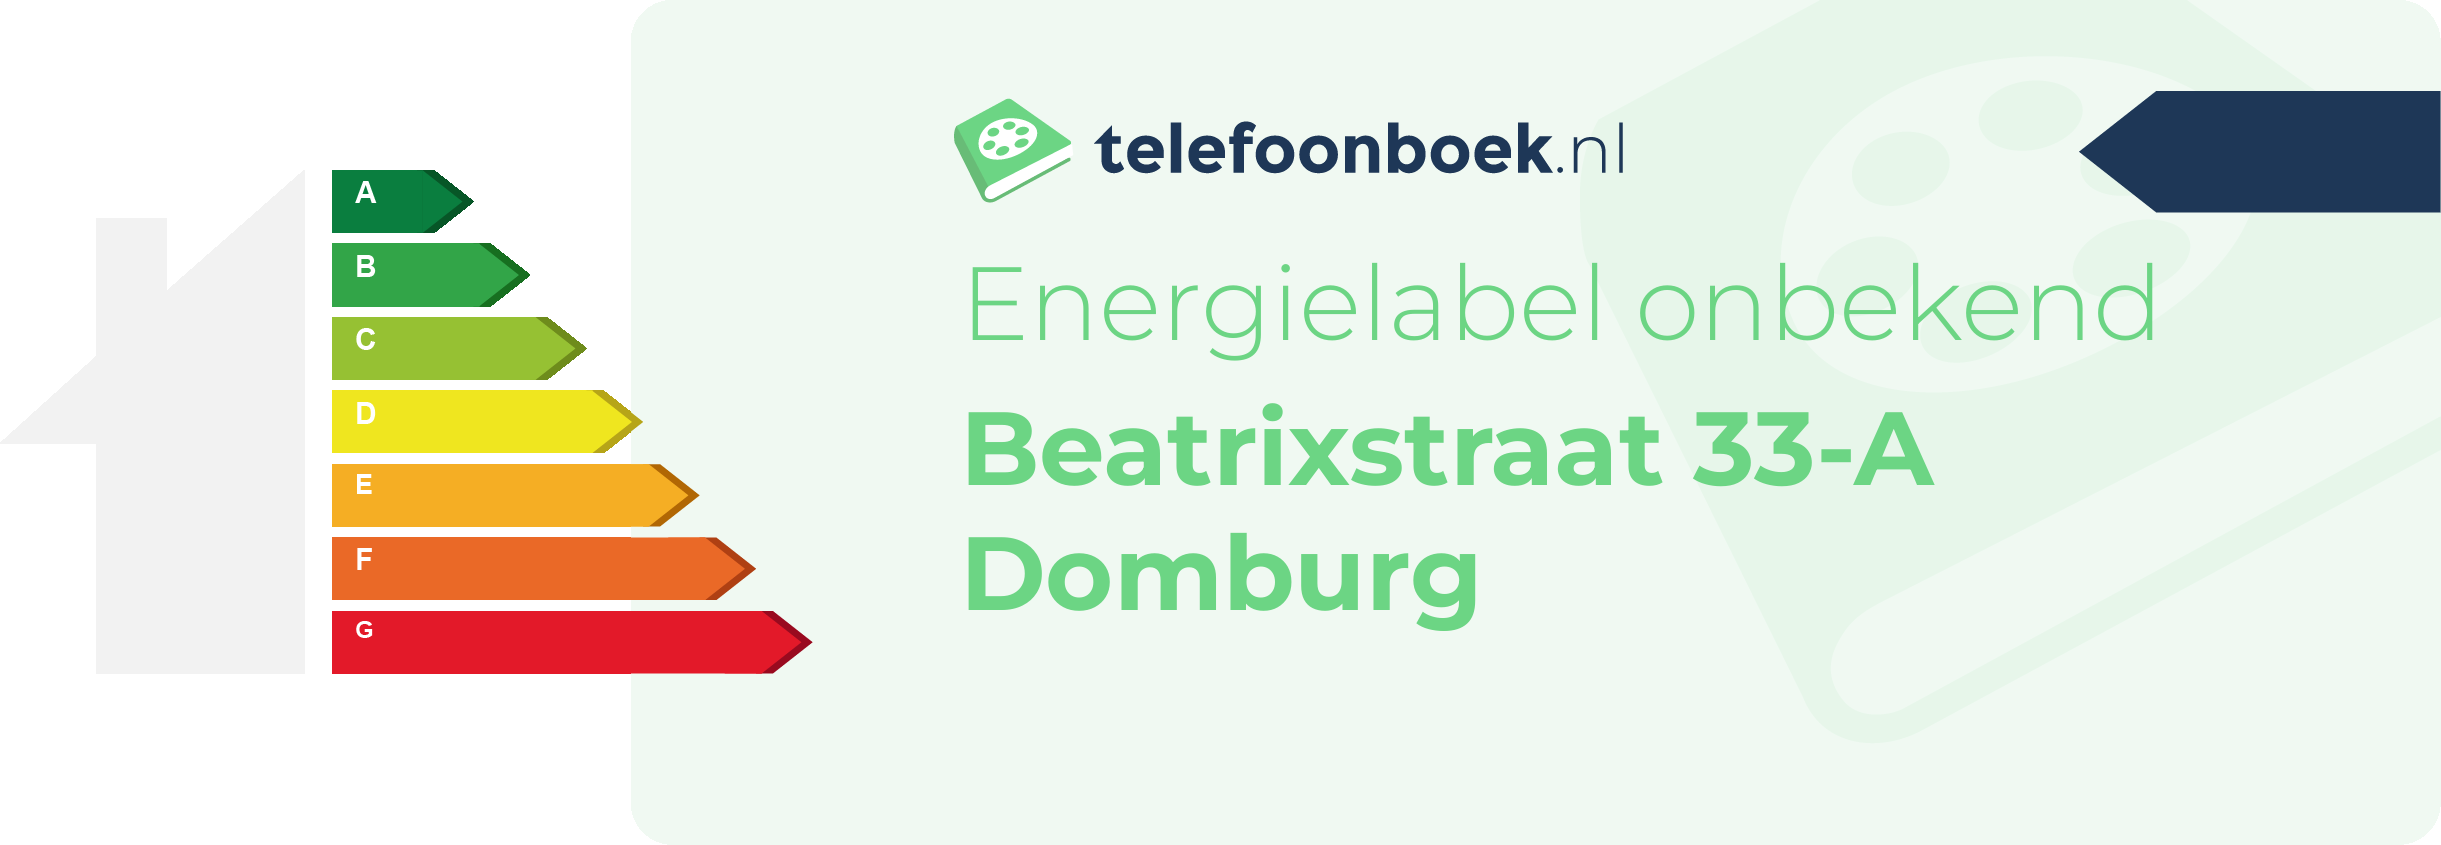 Energielabel Beatrixstraat 33-A Domburg